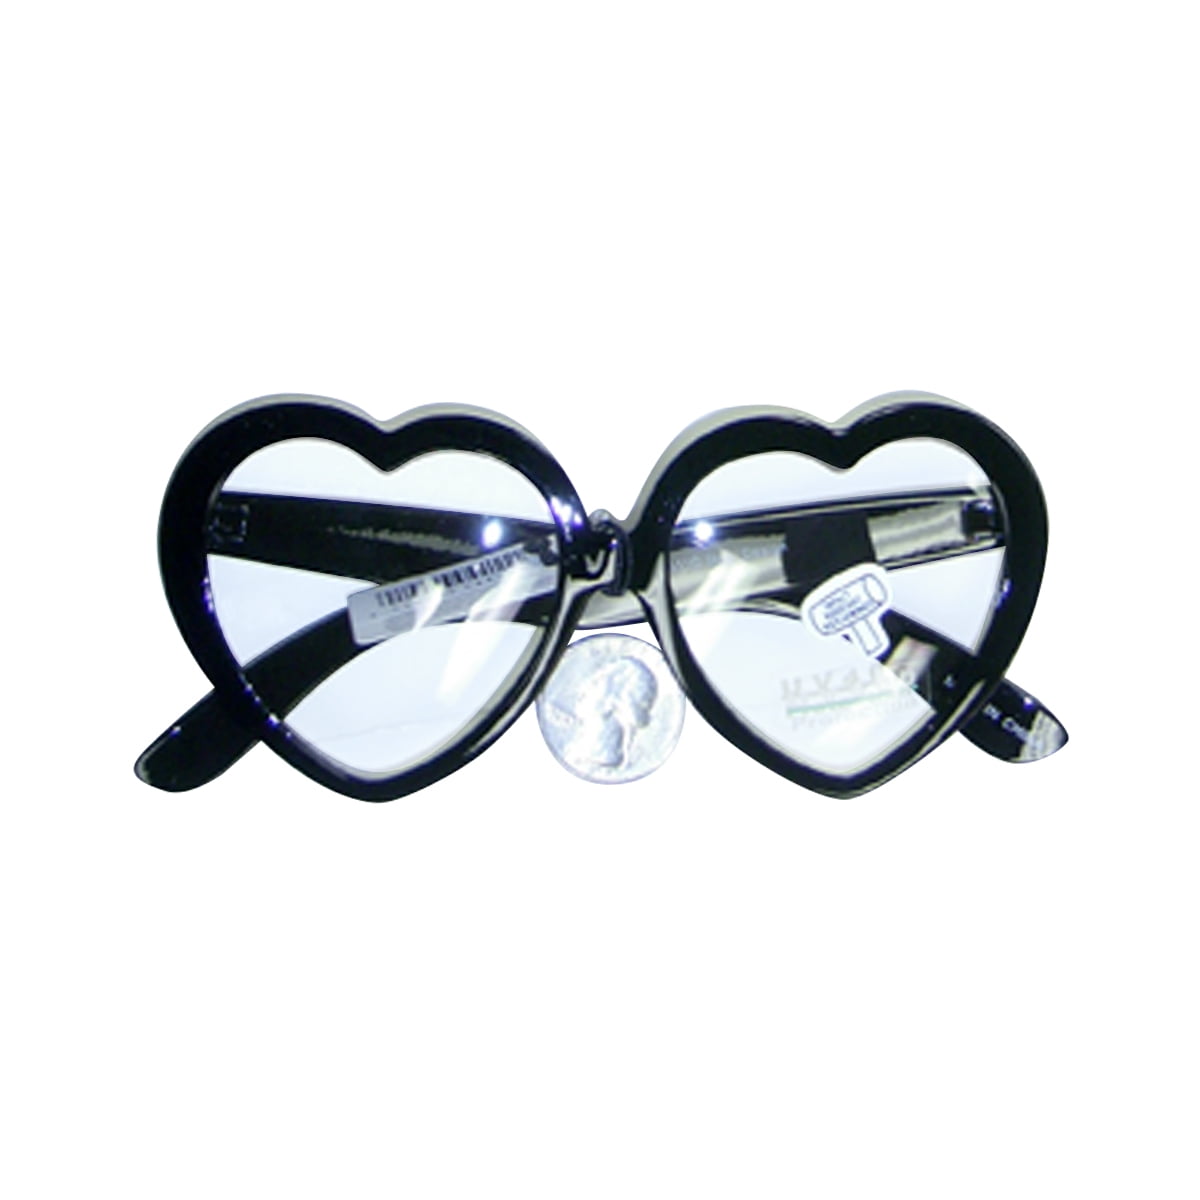 Heart Glasses Effect Black with Stylish Glasses case Heart Frame, Black